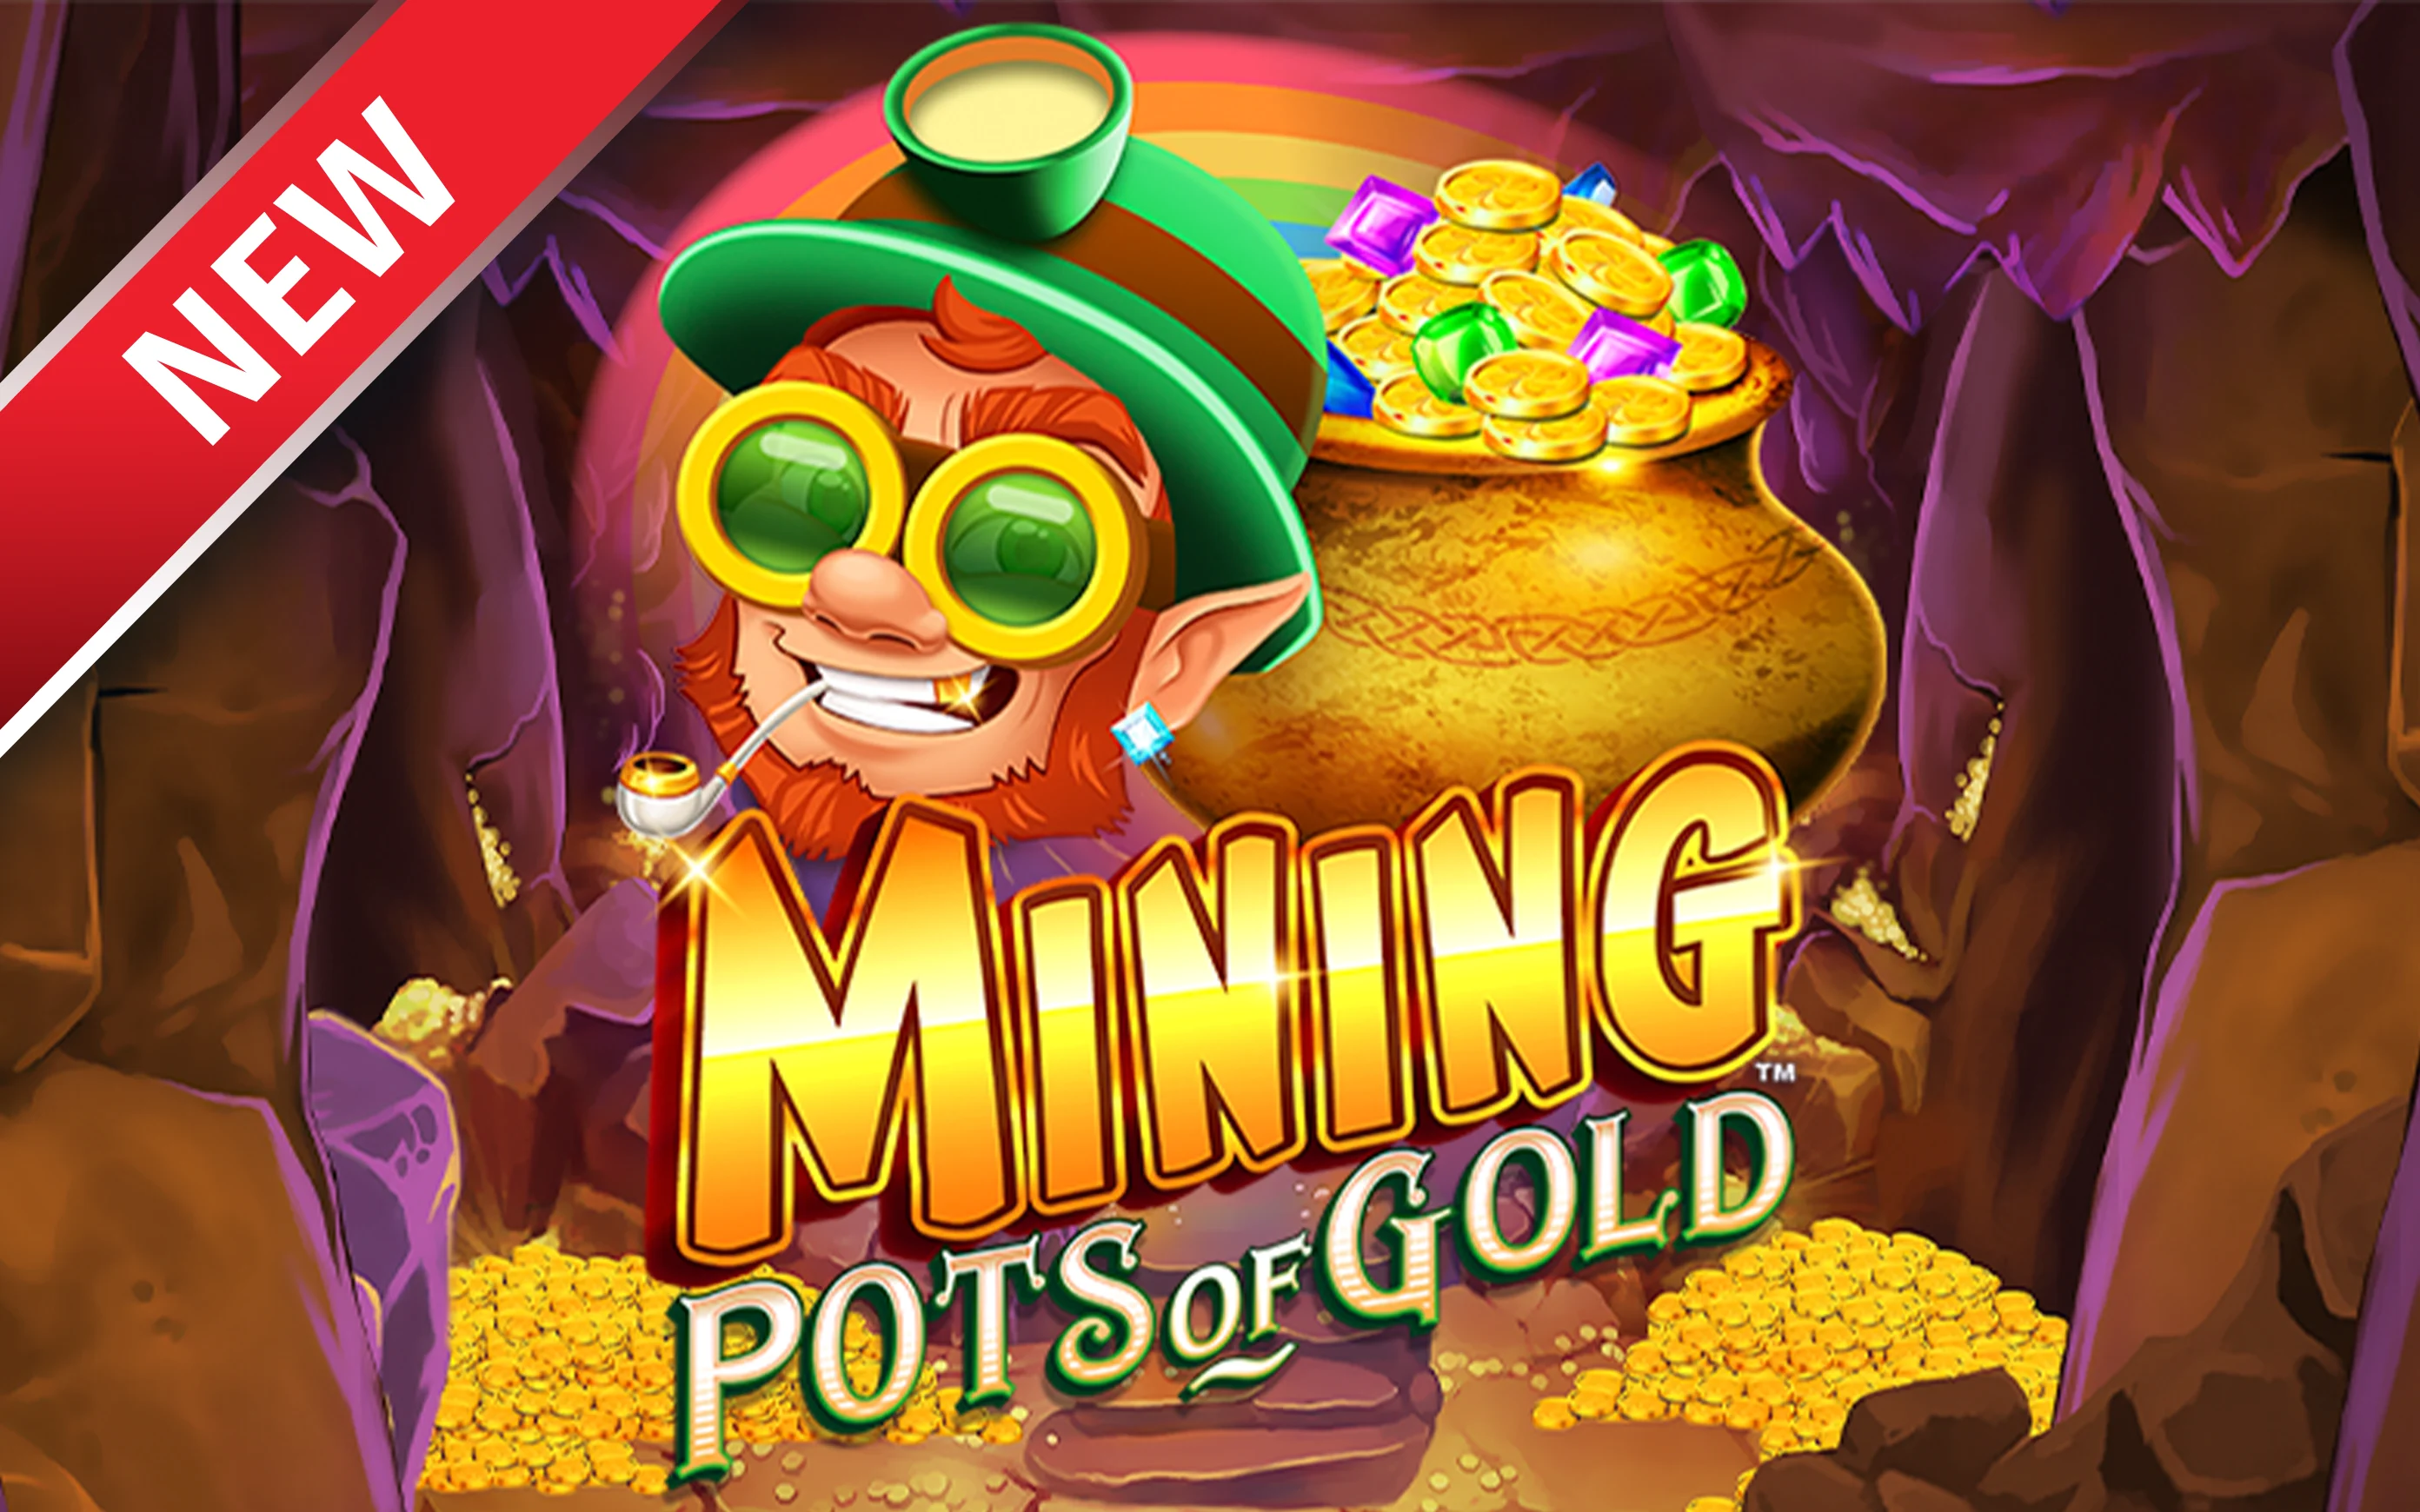 Play Mining Pots of Gold™ on StarcasinoBE online casino